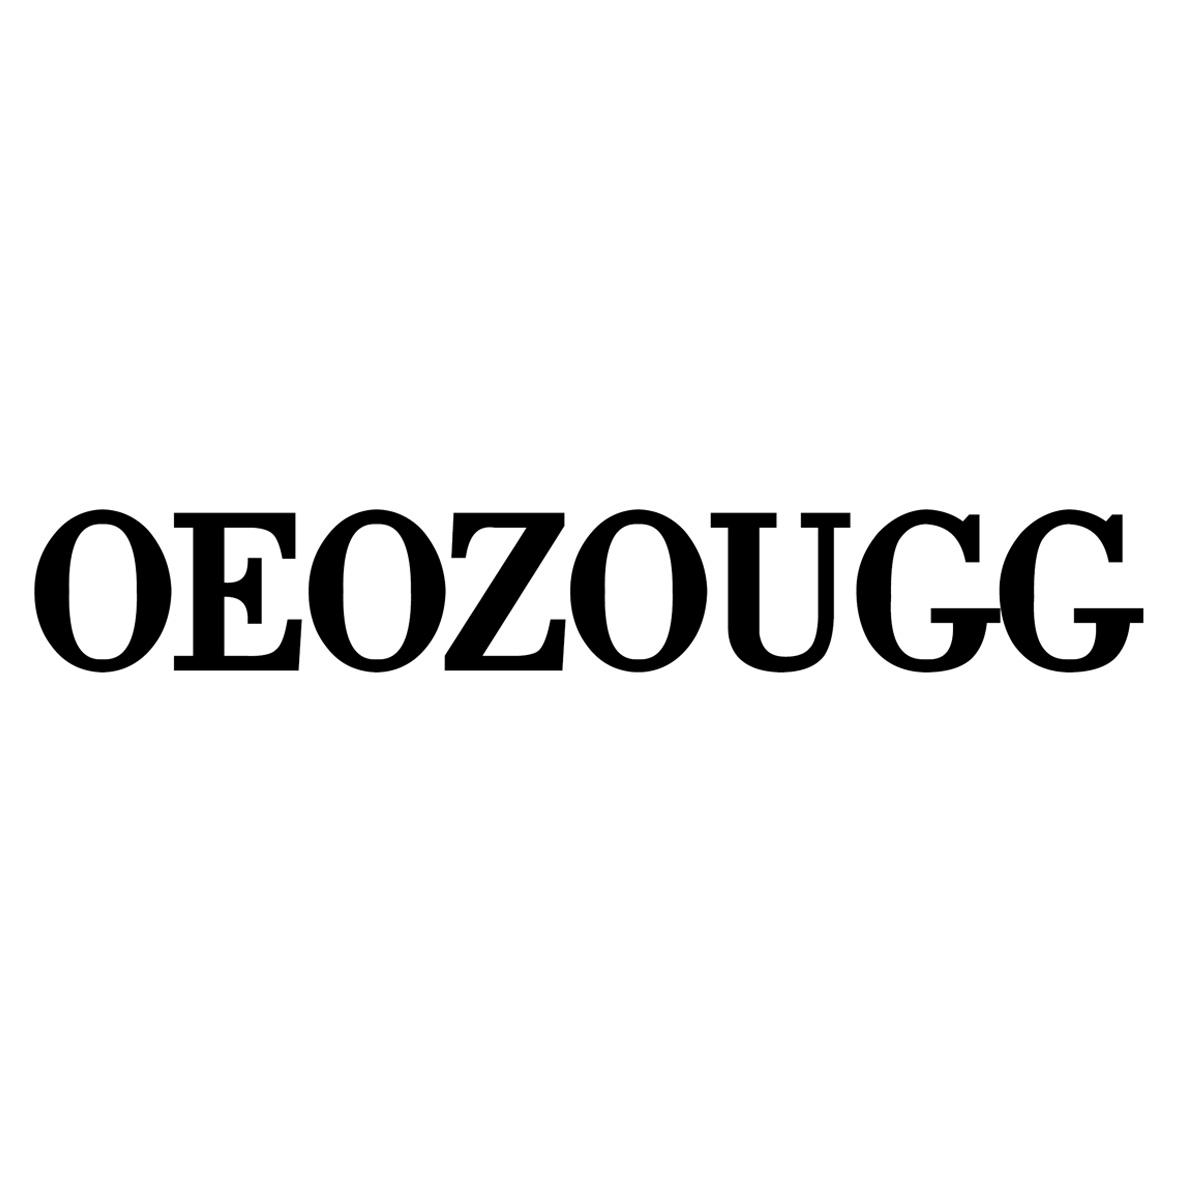 25类-服装鞋帽OEOZOUGG商标转让